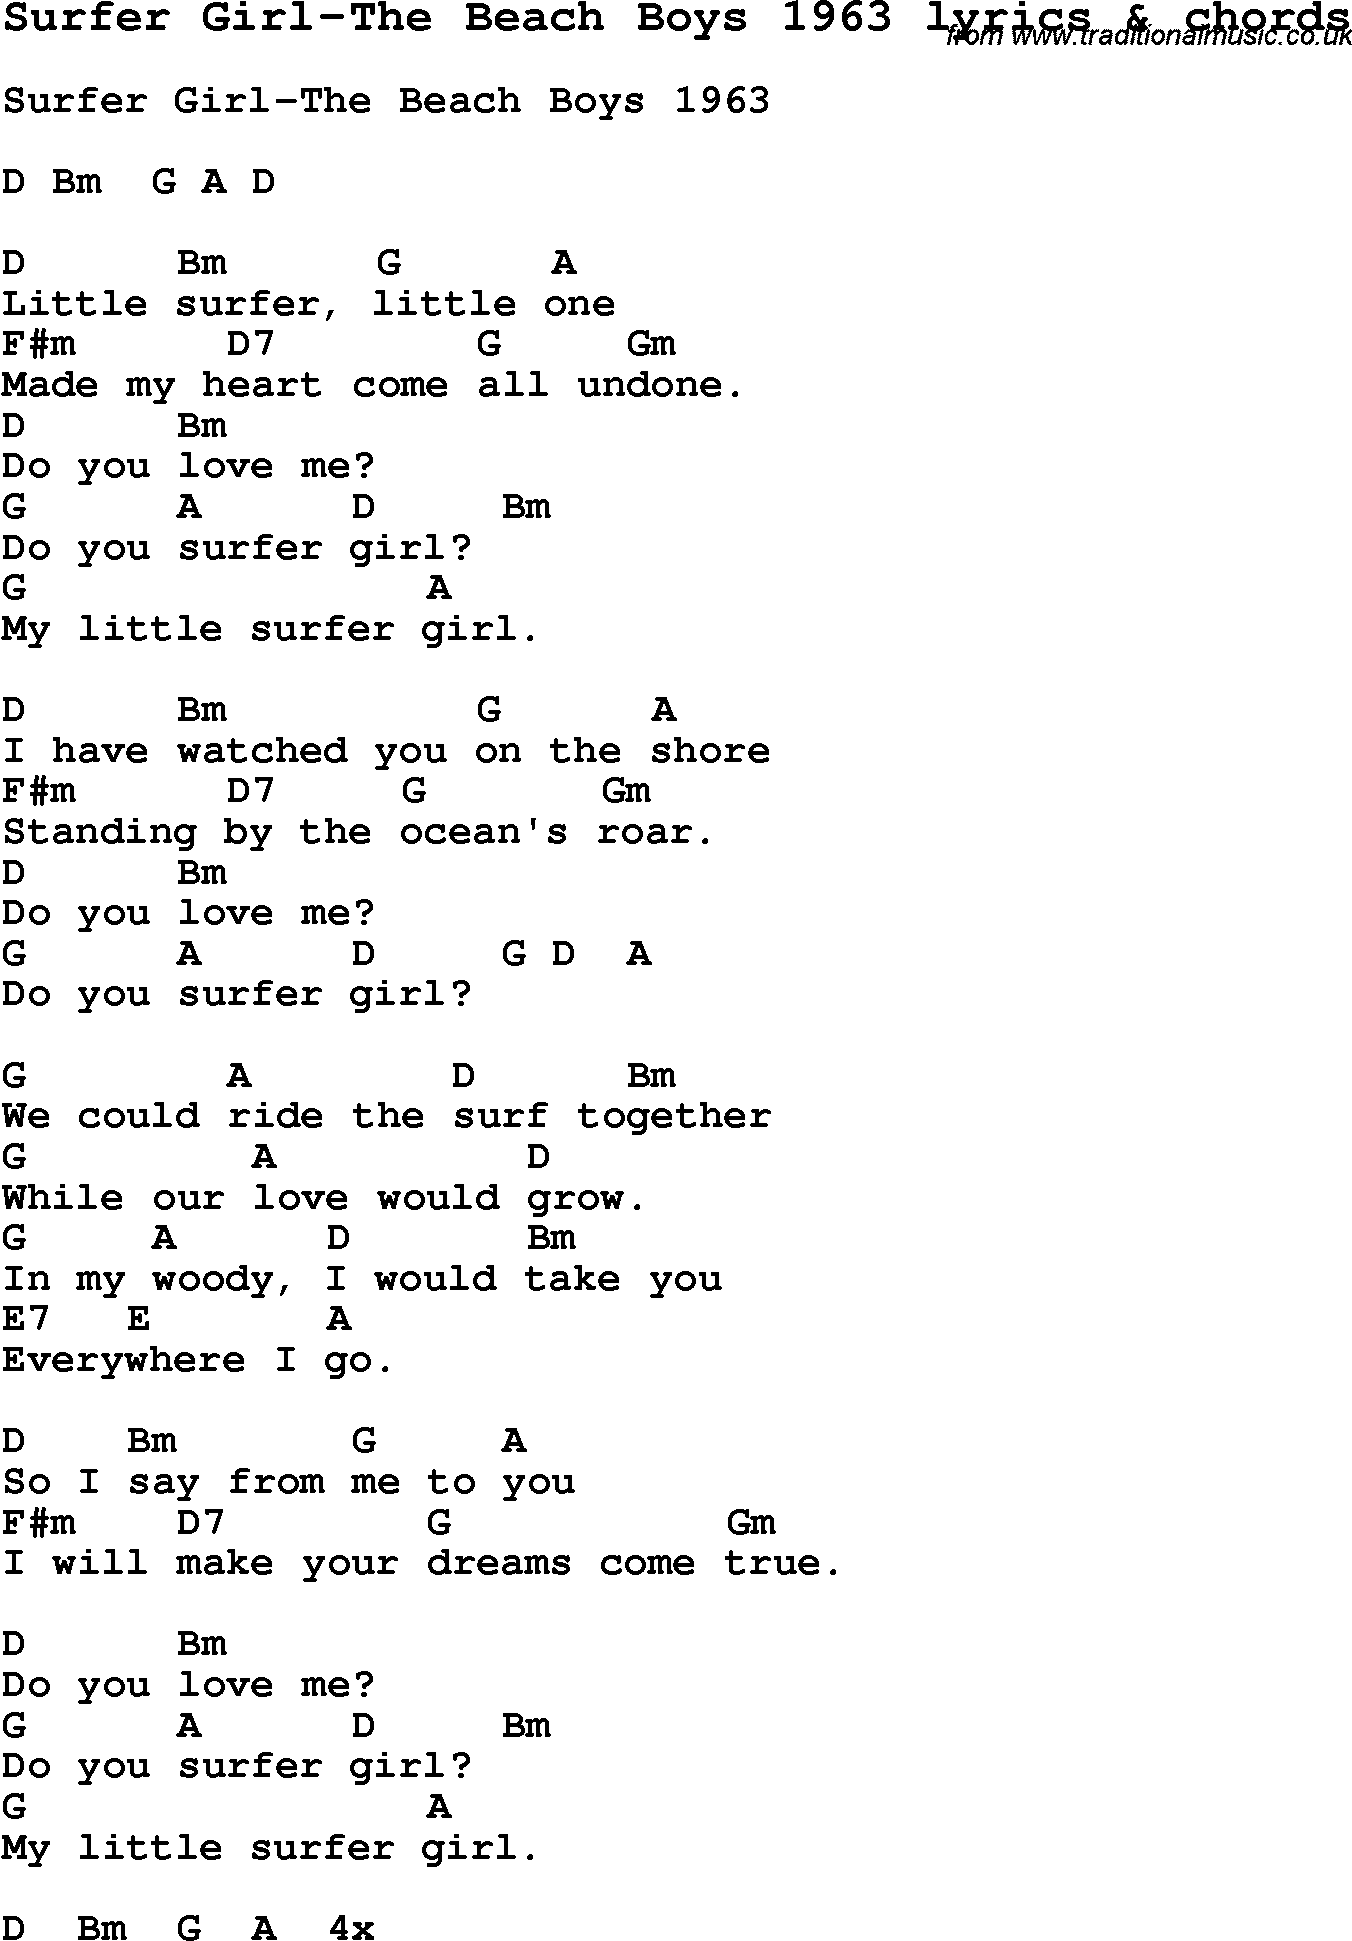 Love Song Lyrics for: Surfer Girl-The Beach Boys 1963 with chords for Ukulele, Guitar Banjo etc.